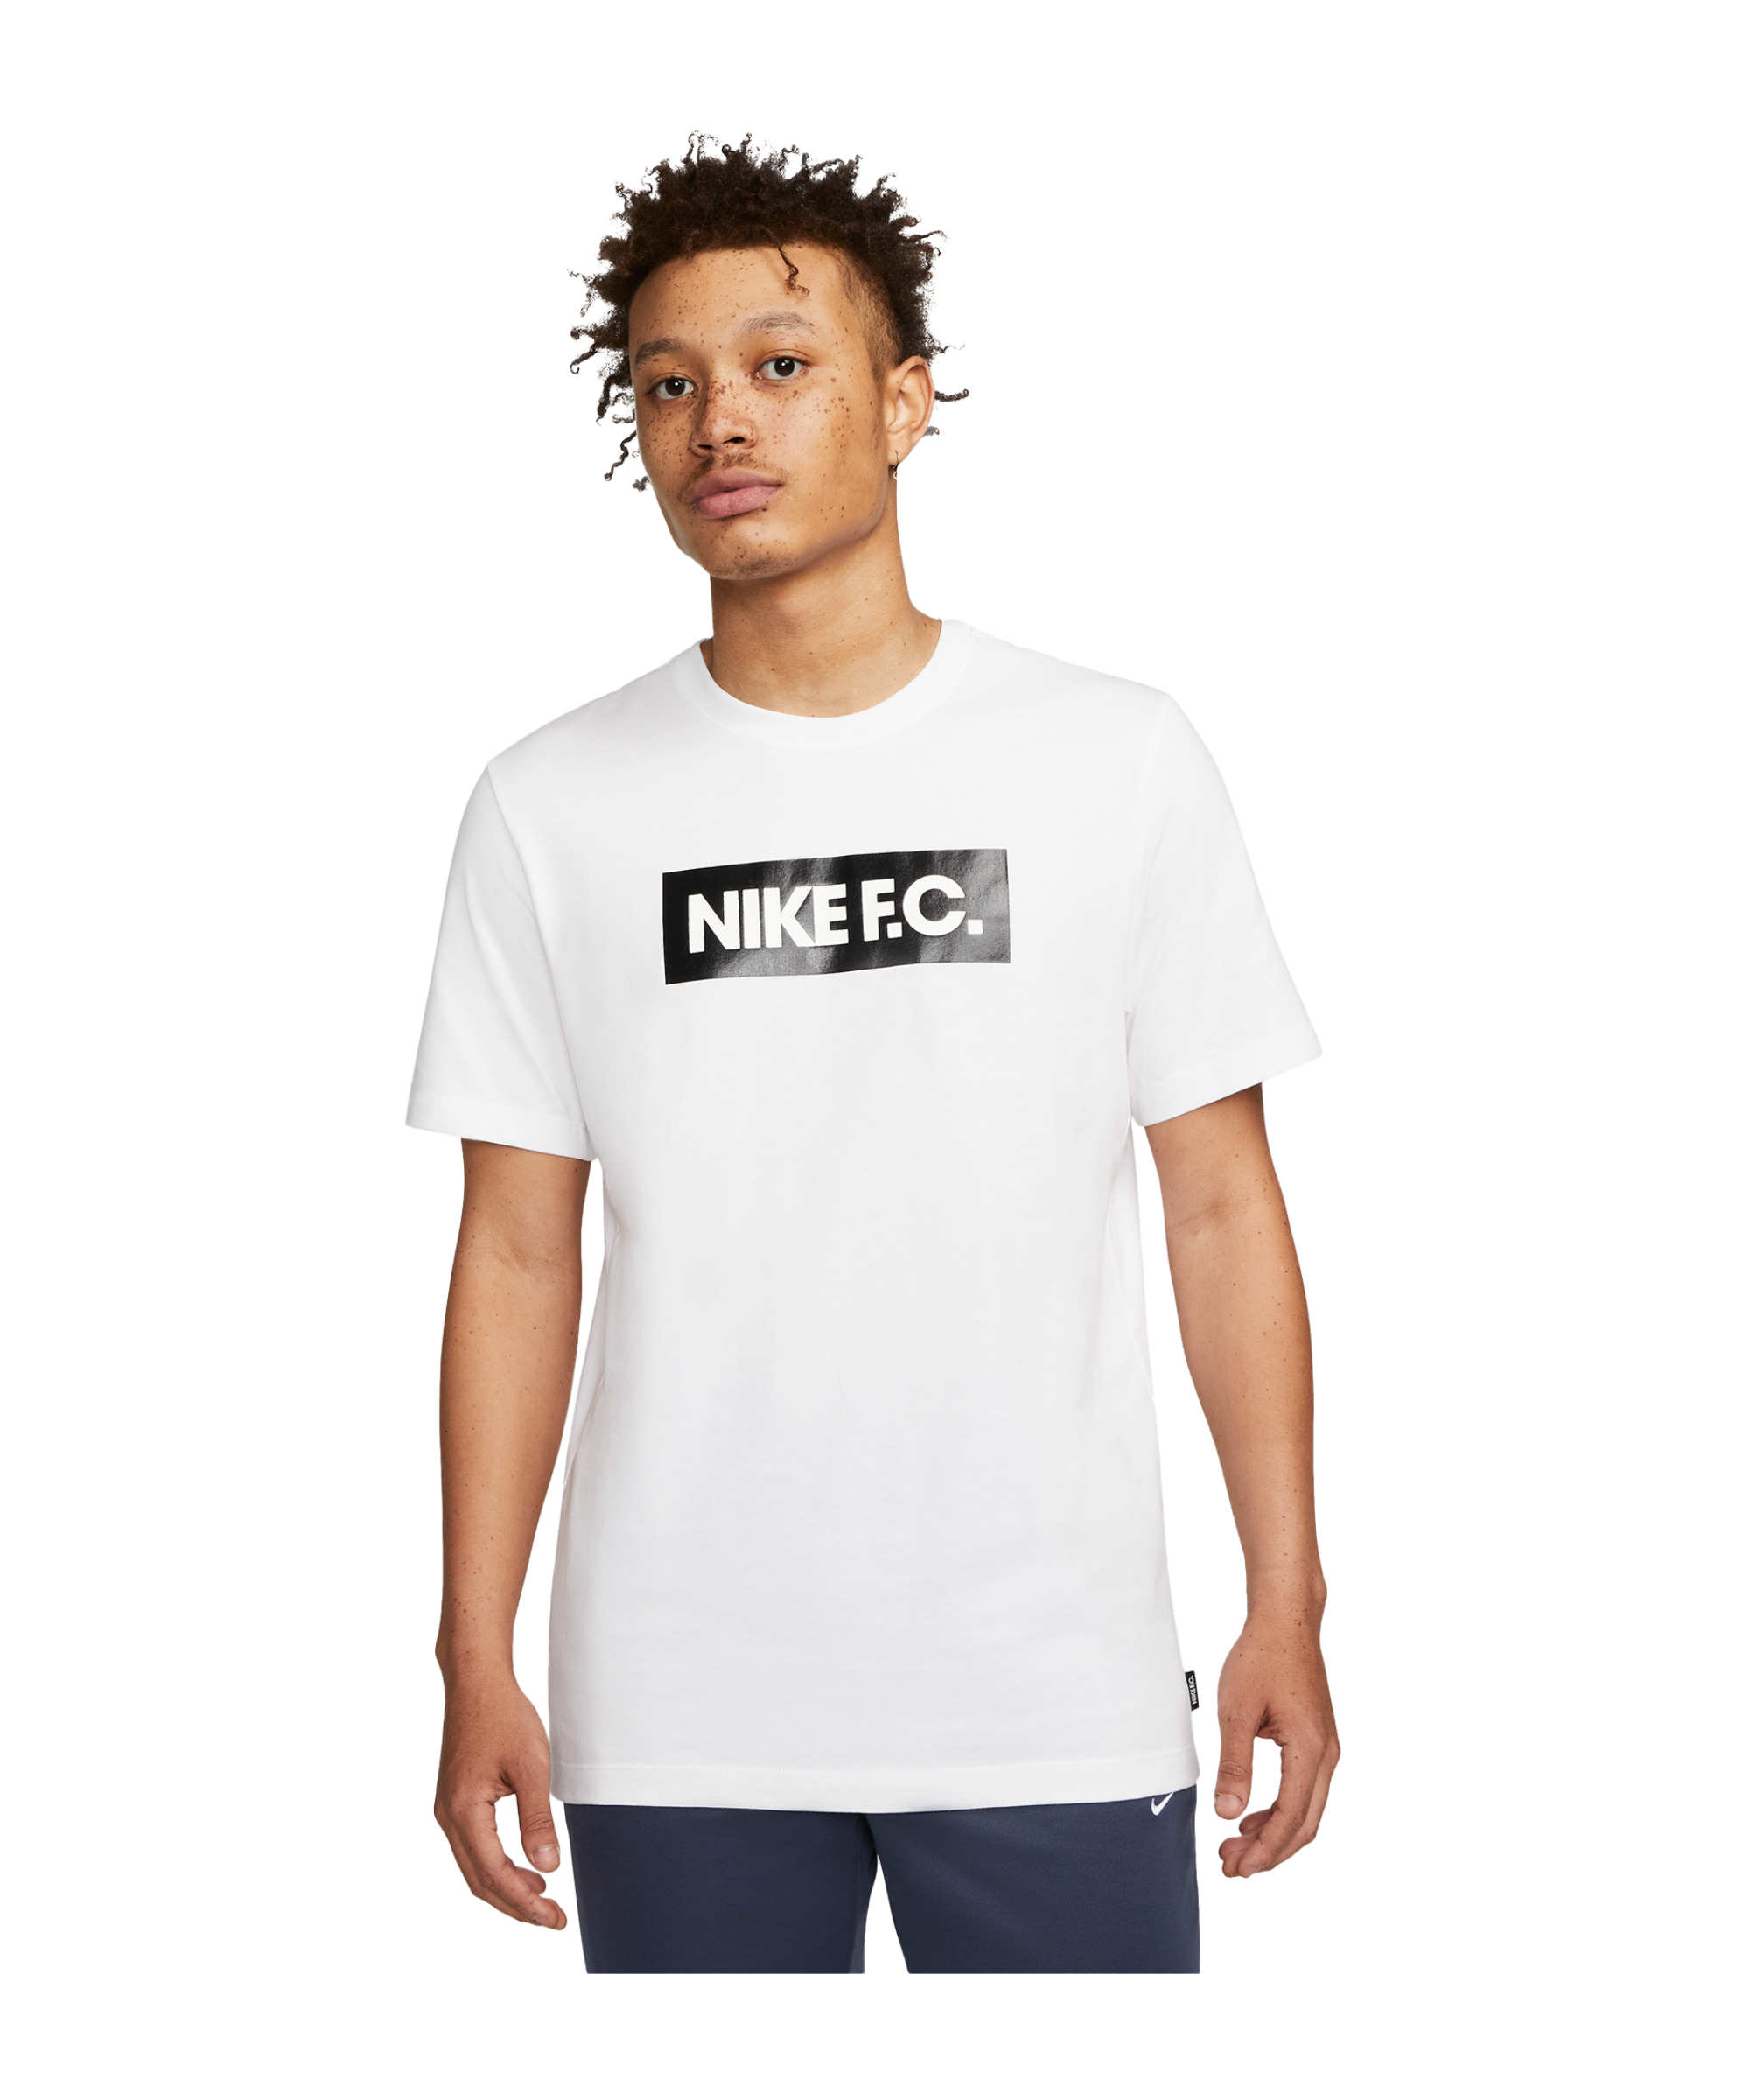 berekenen op gang brengen Traditie Nike F.C. T-Shirt - Zwart